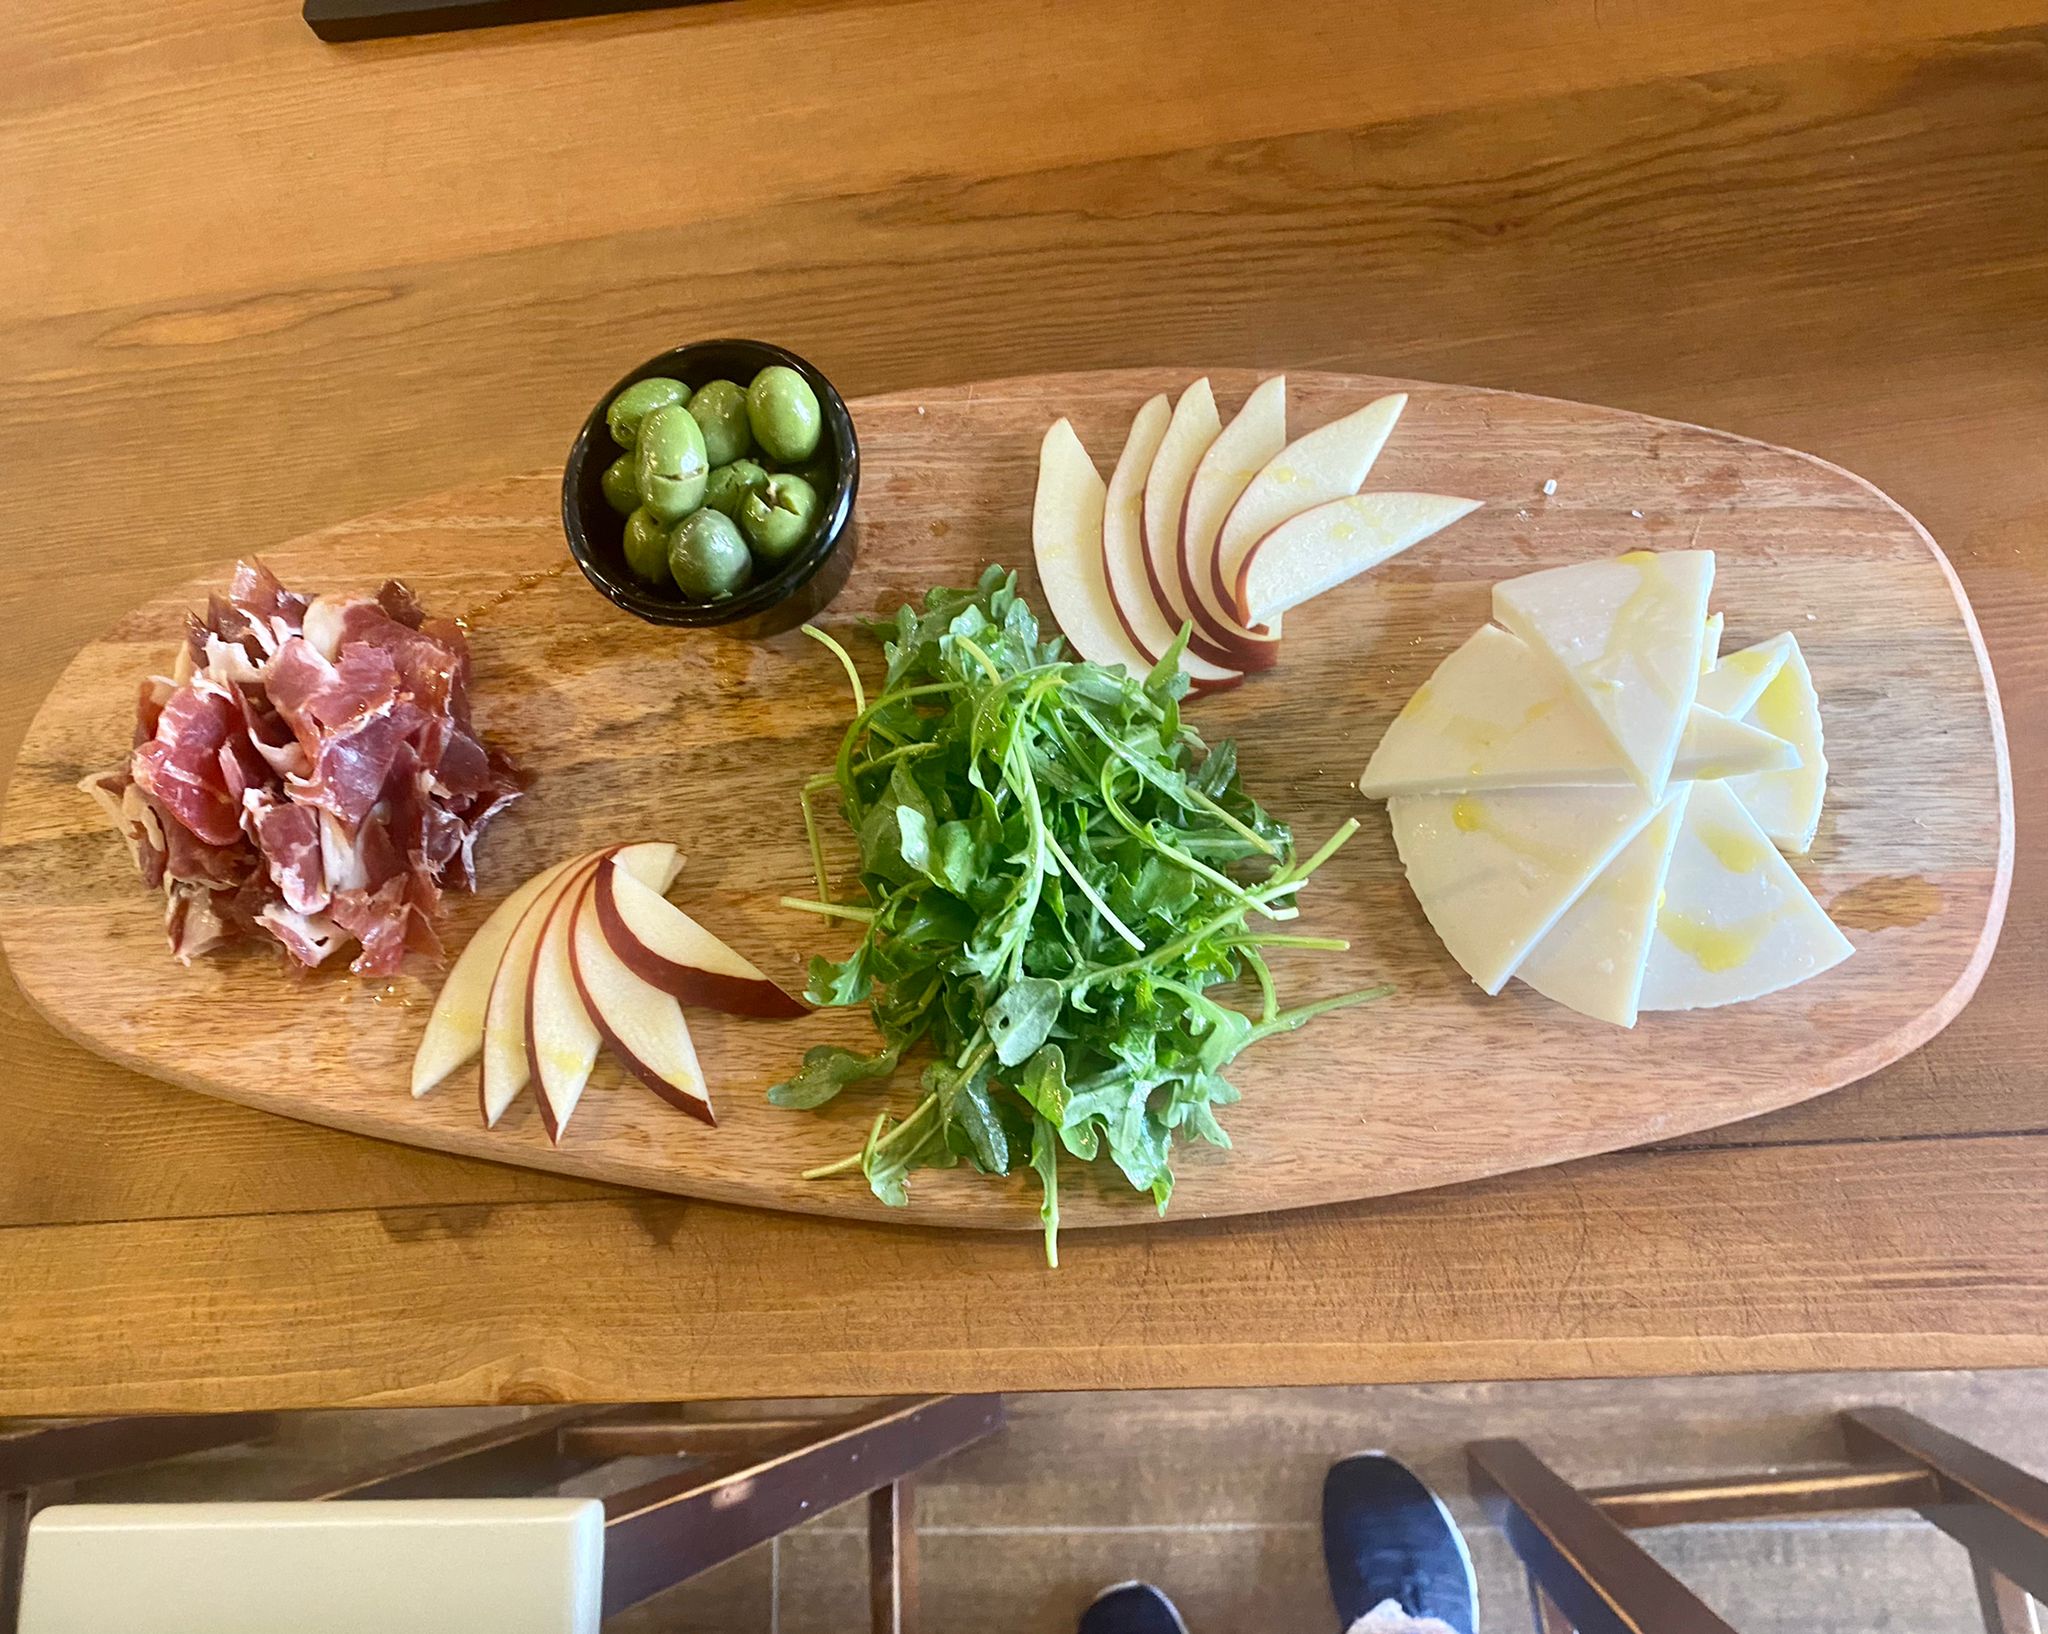 Board of Iberian Ham, Payoyo Cheese, olives and Seasonal Fruits